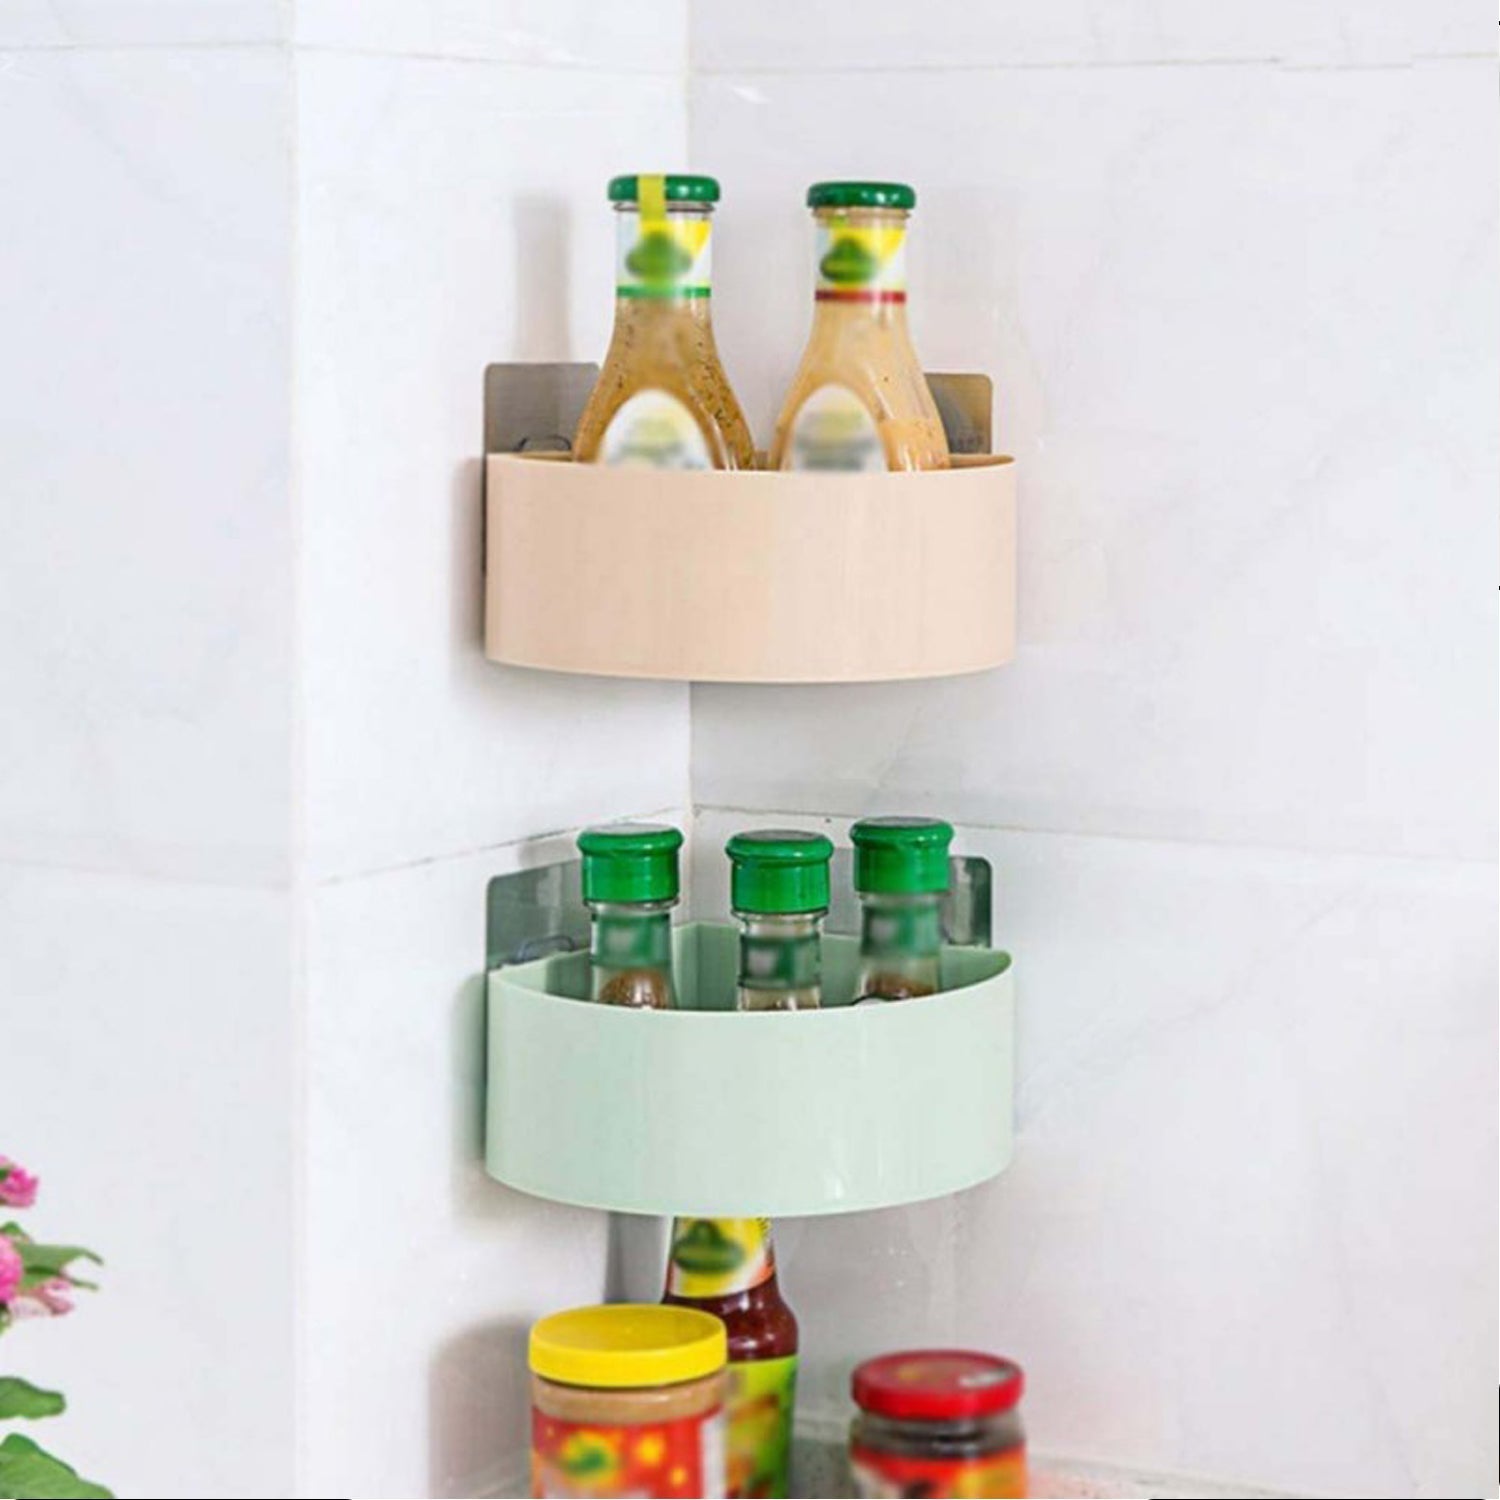 4033 Corner Shelf Bathroom Kitchen Rack Self Adhesive Shower Caddy Plastic Triangle Wall Mount Storage Basket Primerce